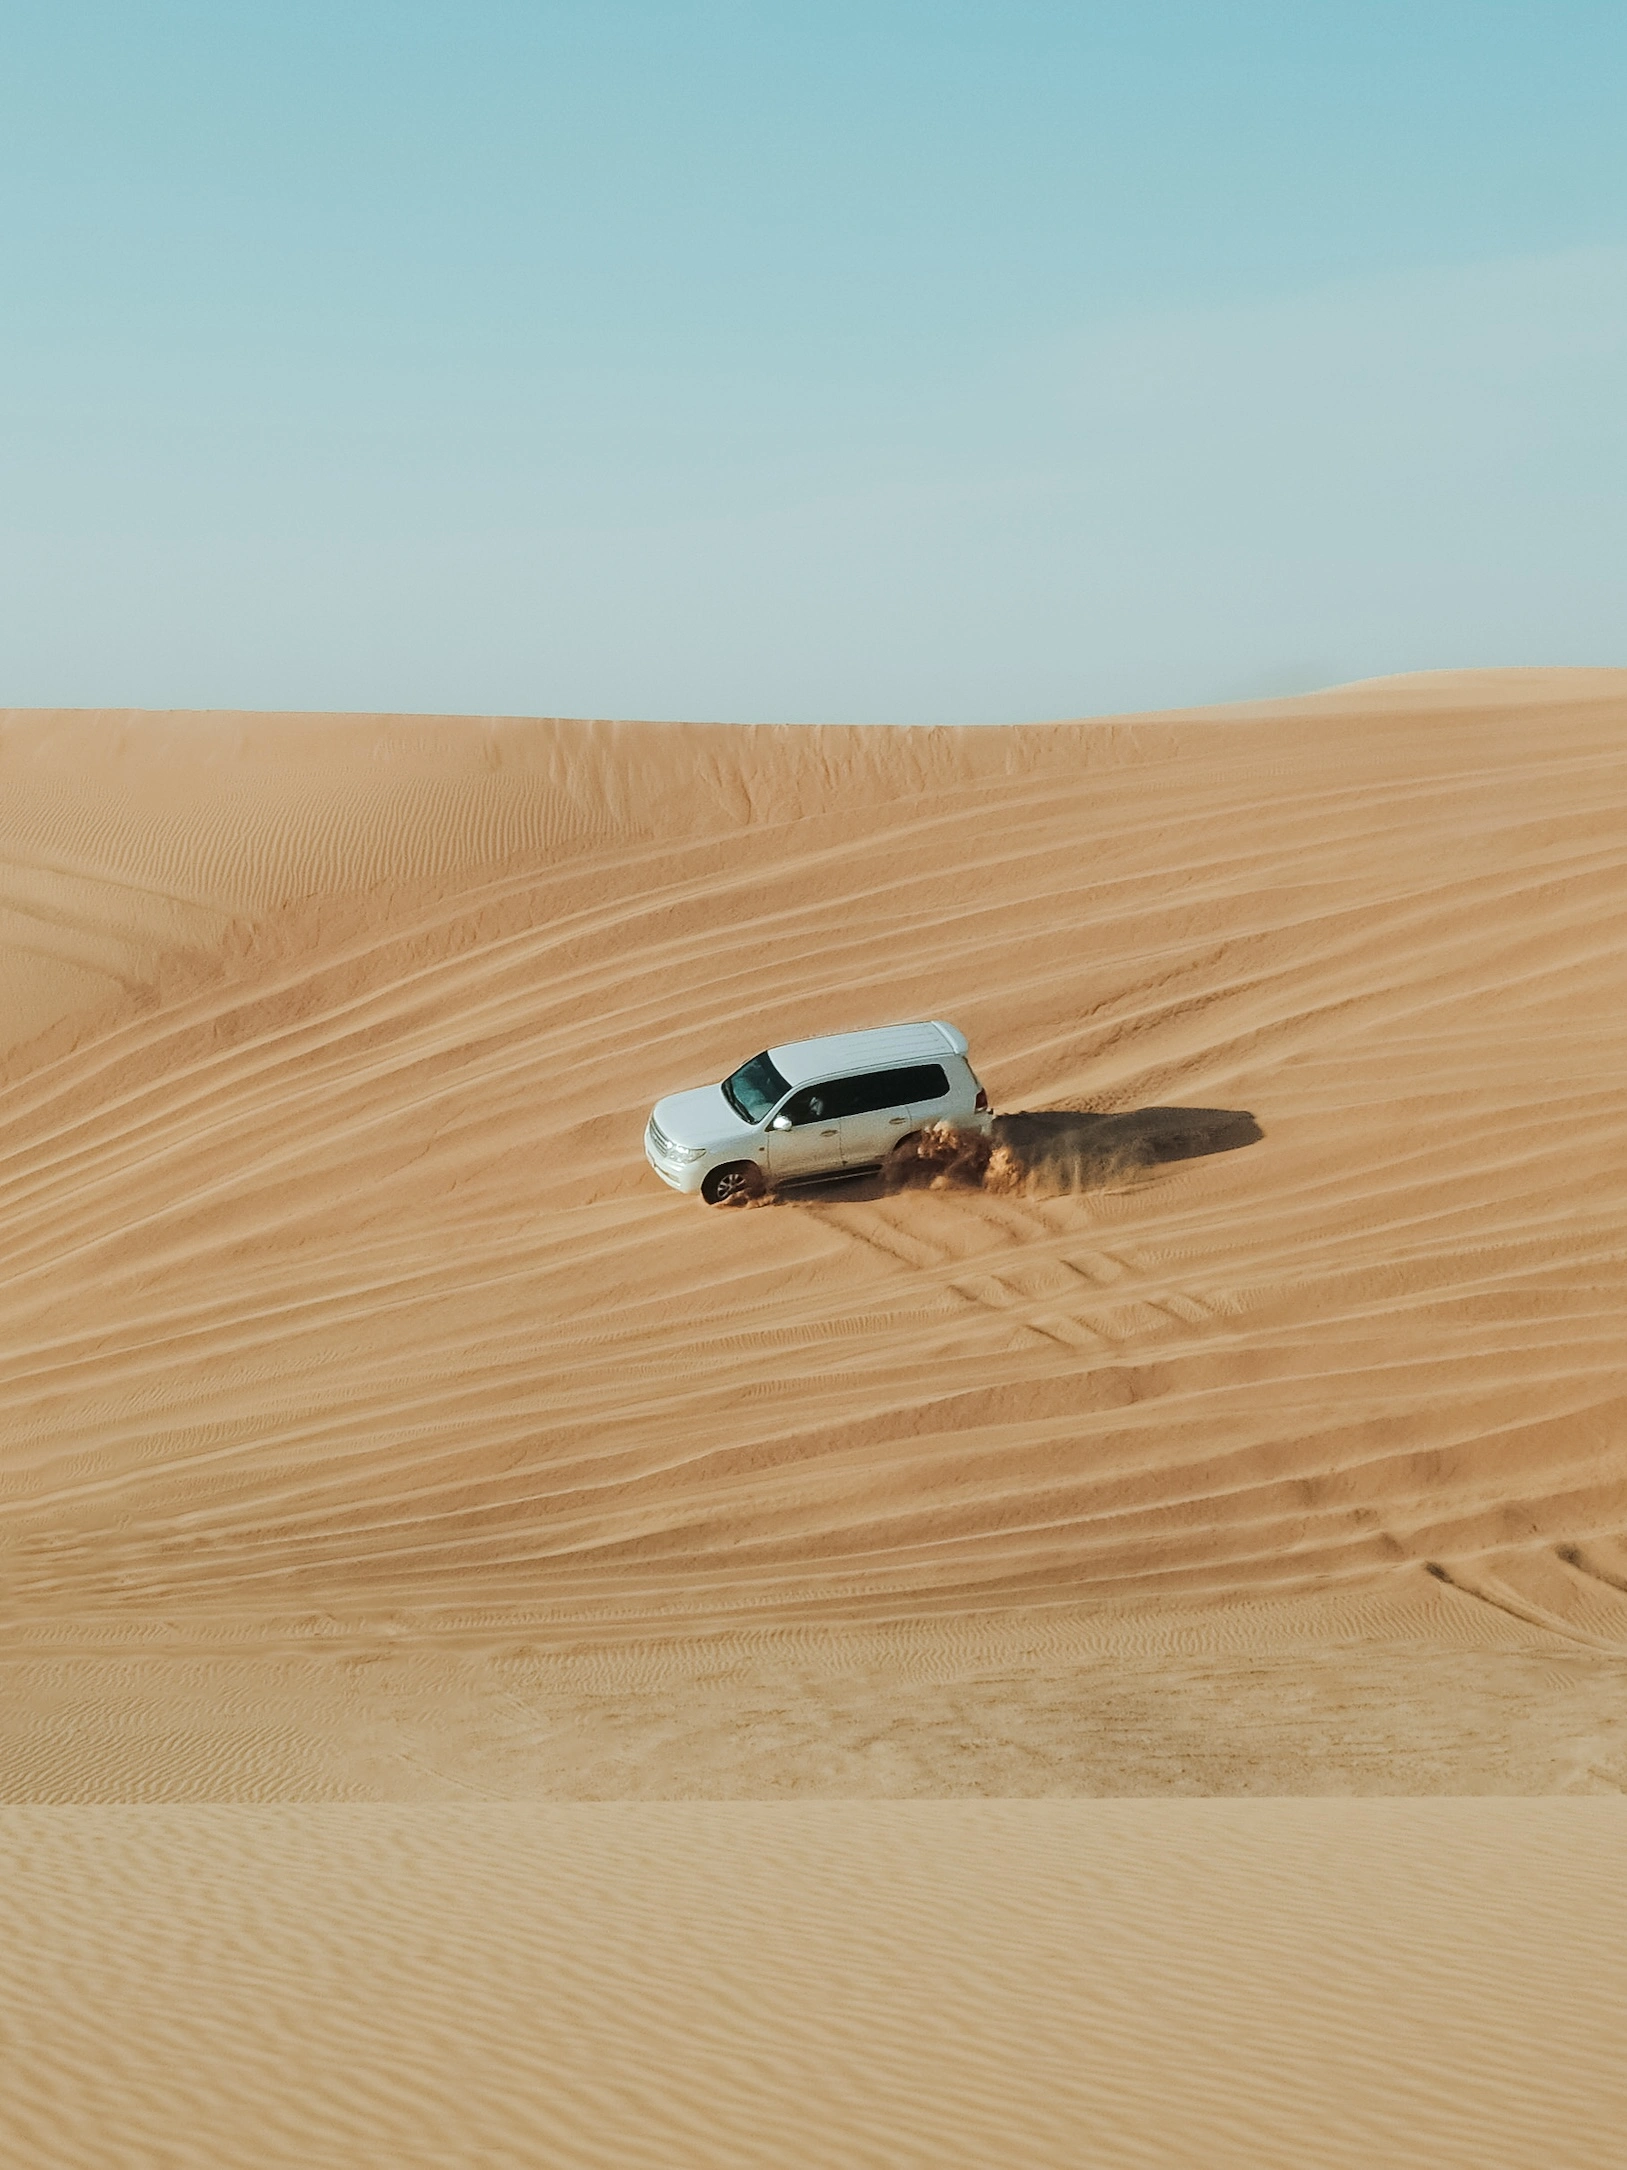 a land cruiser 4x4 drifting down a sand dune in the desert